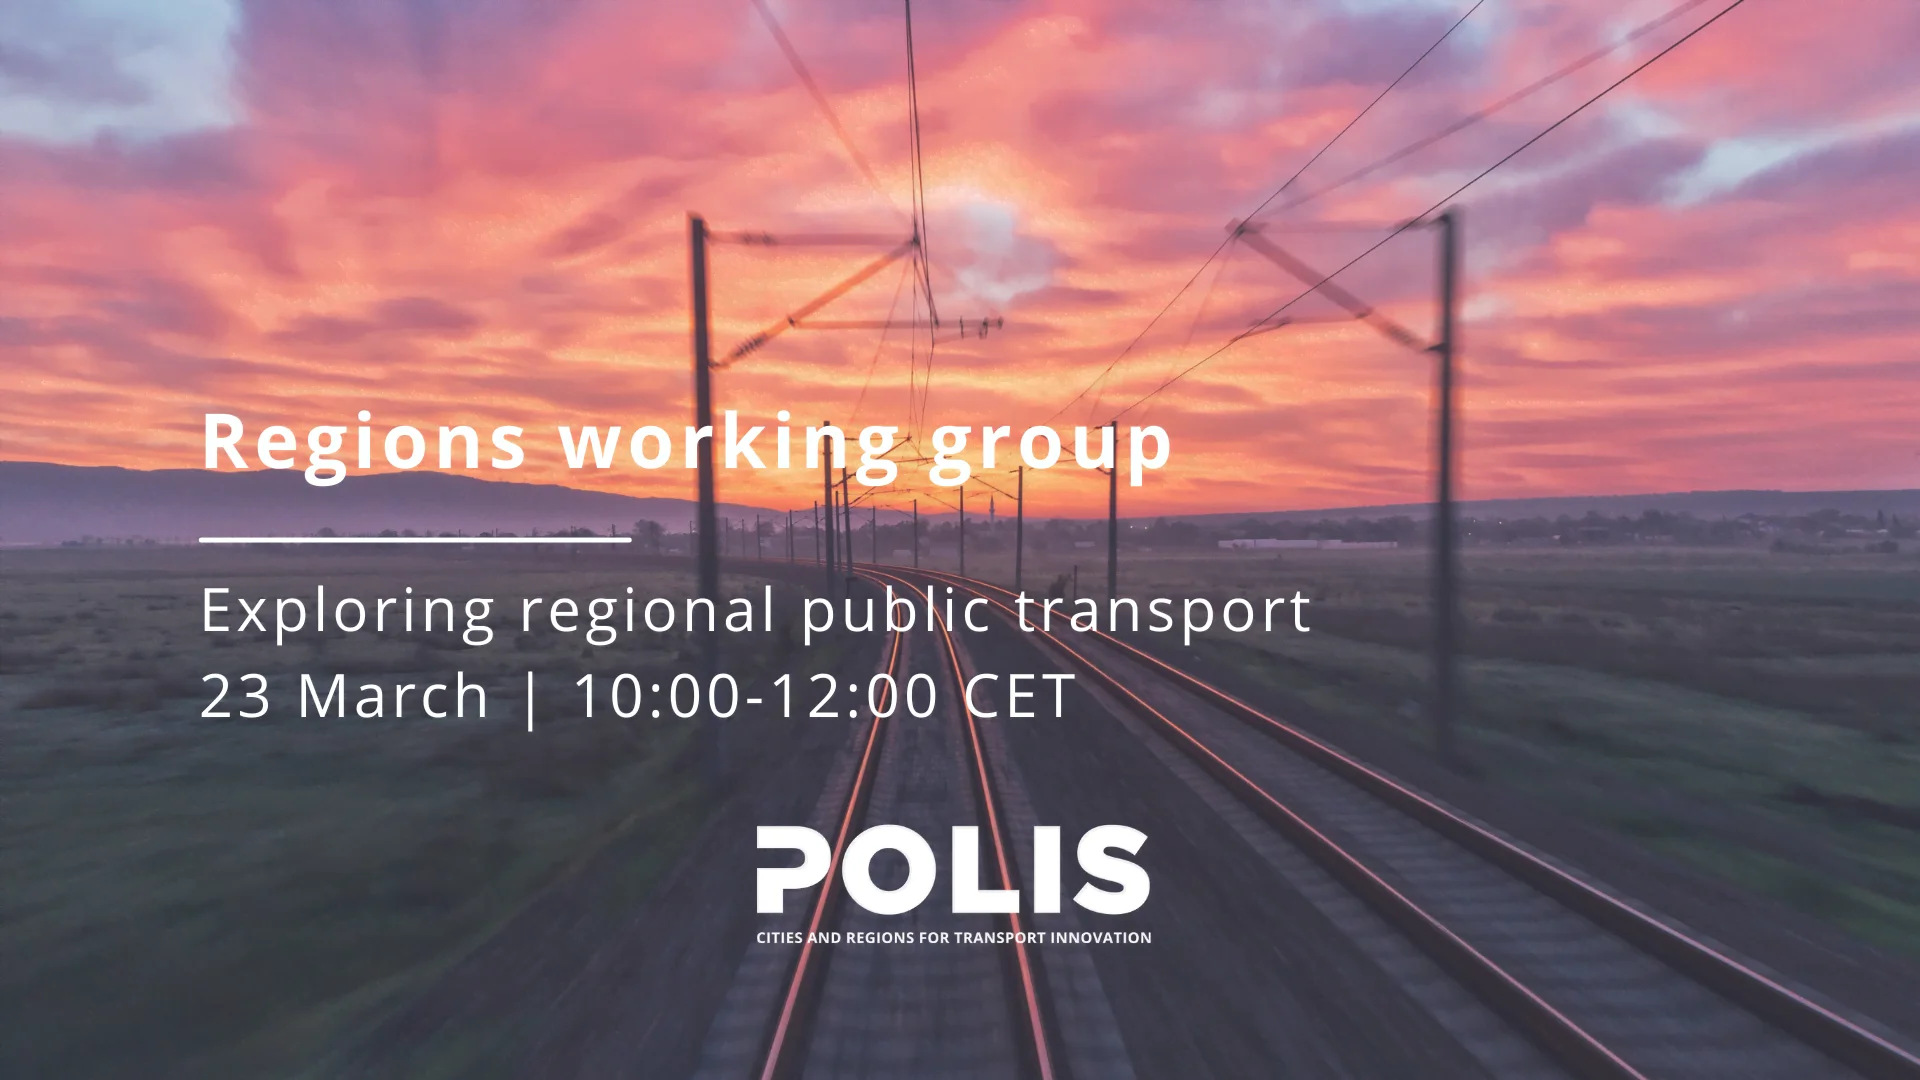 Regions working group meeting: Public transport